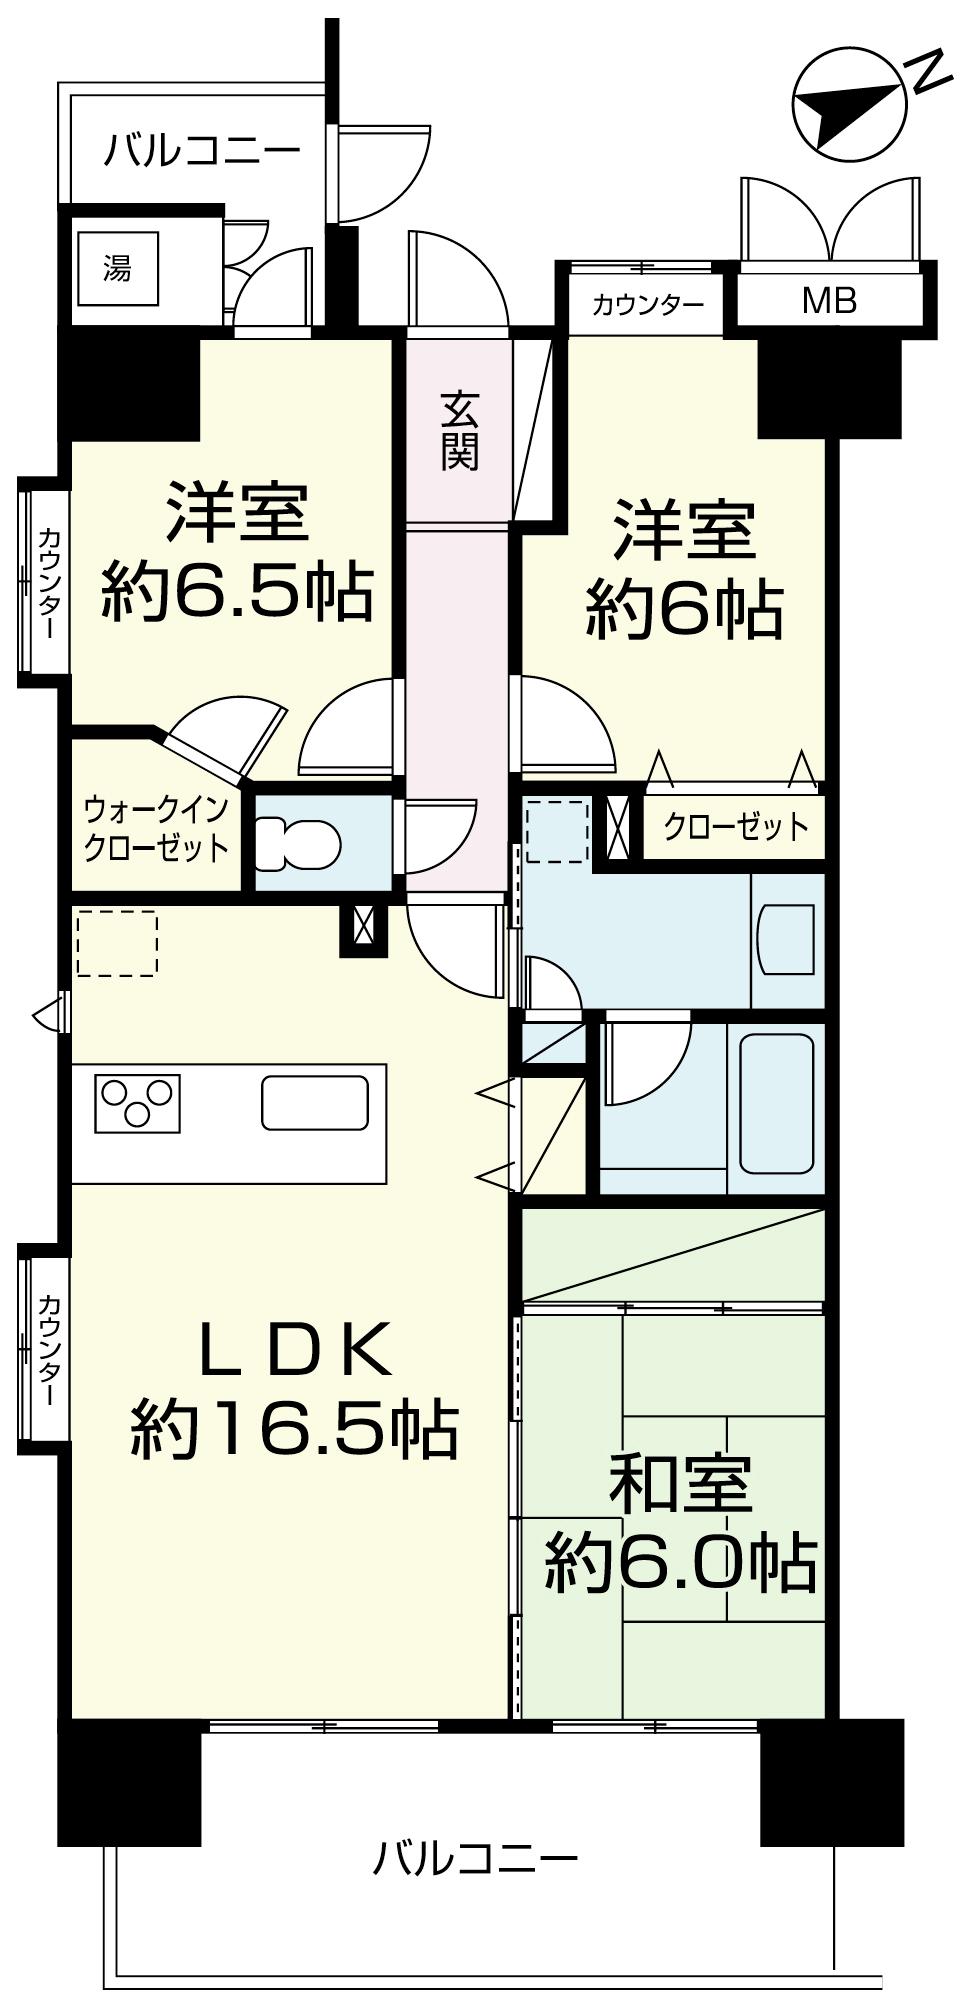 Floor plan. 3LDK, Price 32,400,000 yen, Footprint 76.7 sq m , Balcony area 15.5 sq m